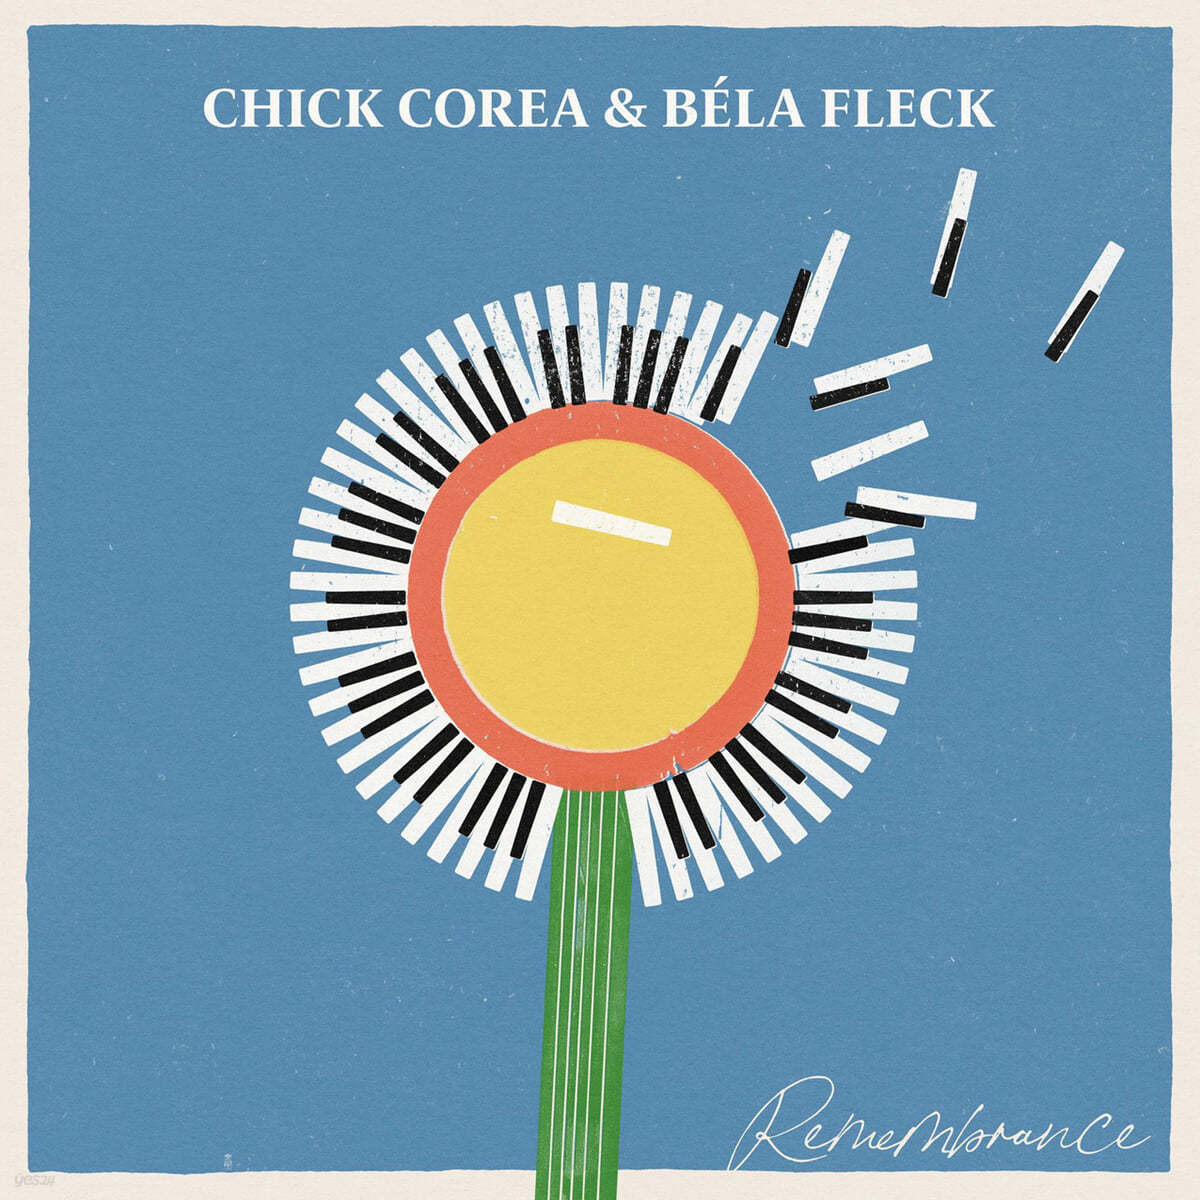 Chick Corea / Bela Fleck - Remembrance